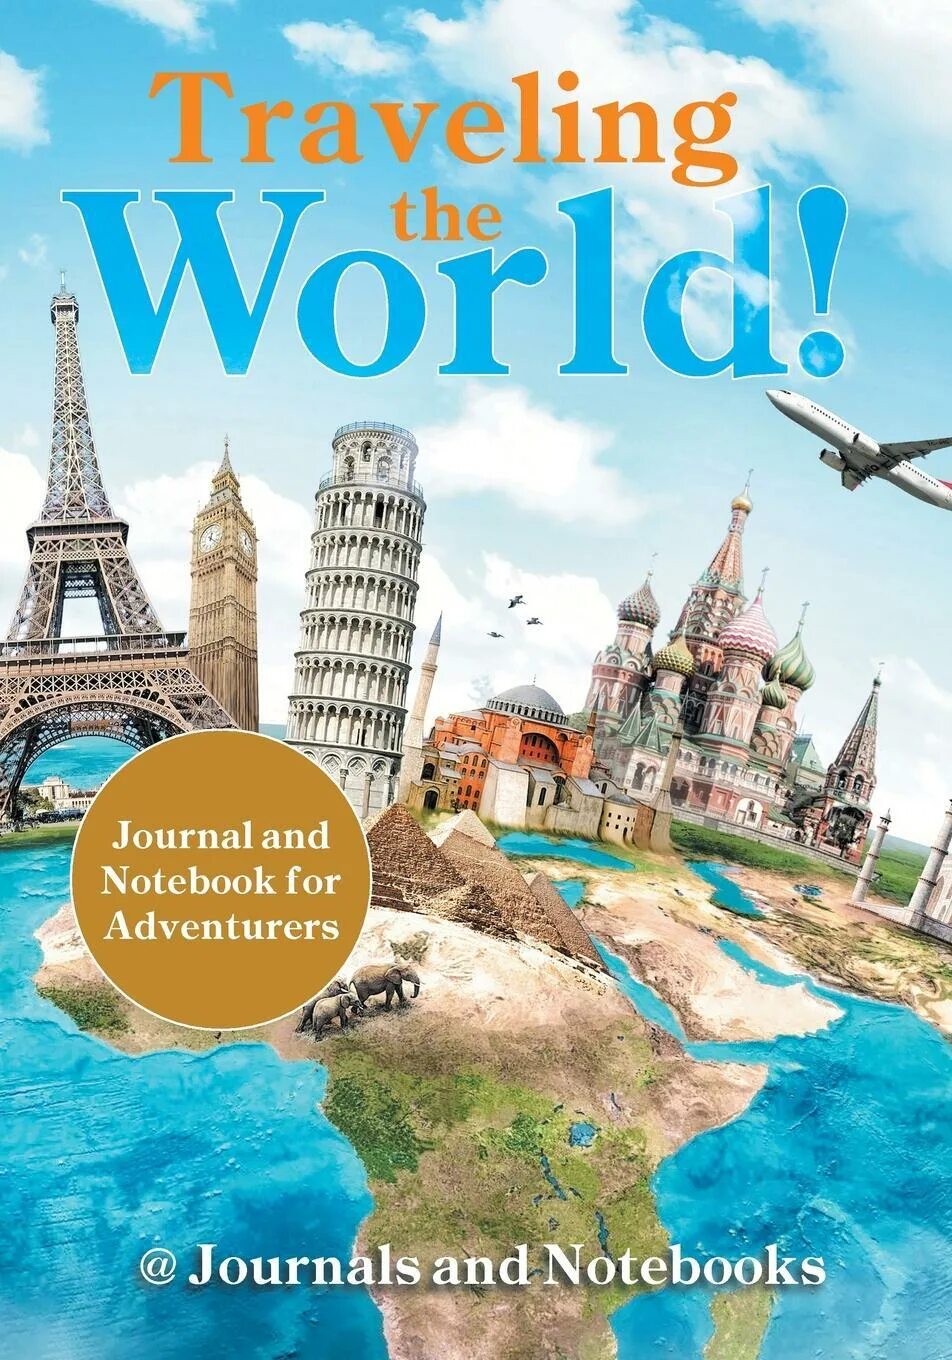 Книга путешествия. Travelling the World. World Travel. Путешествие с Педро. We travel the world